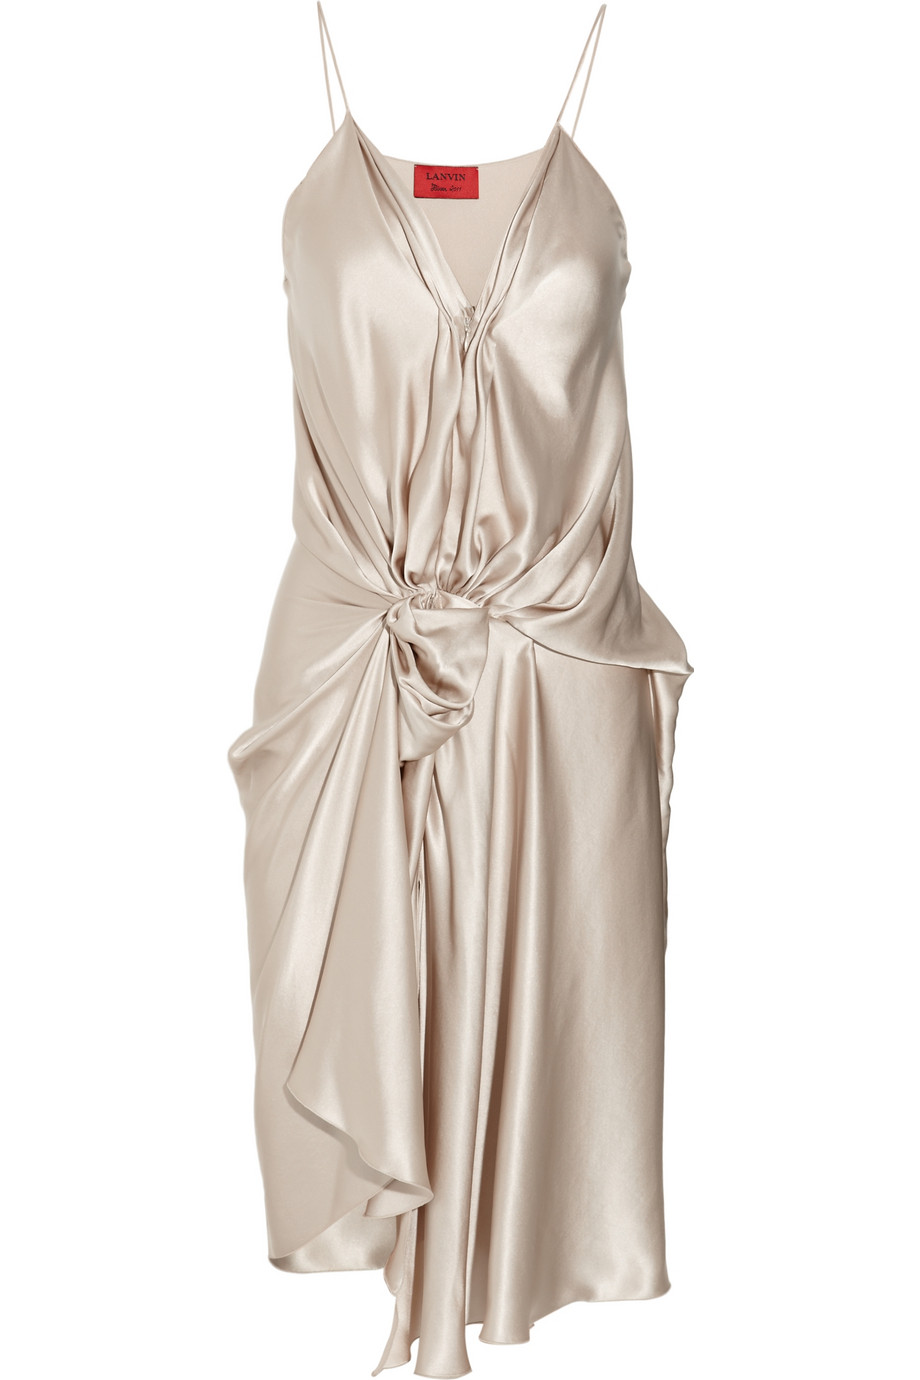 Lyst - Lanvin Draped Silk Satin Dress in White